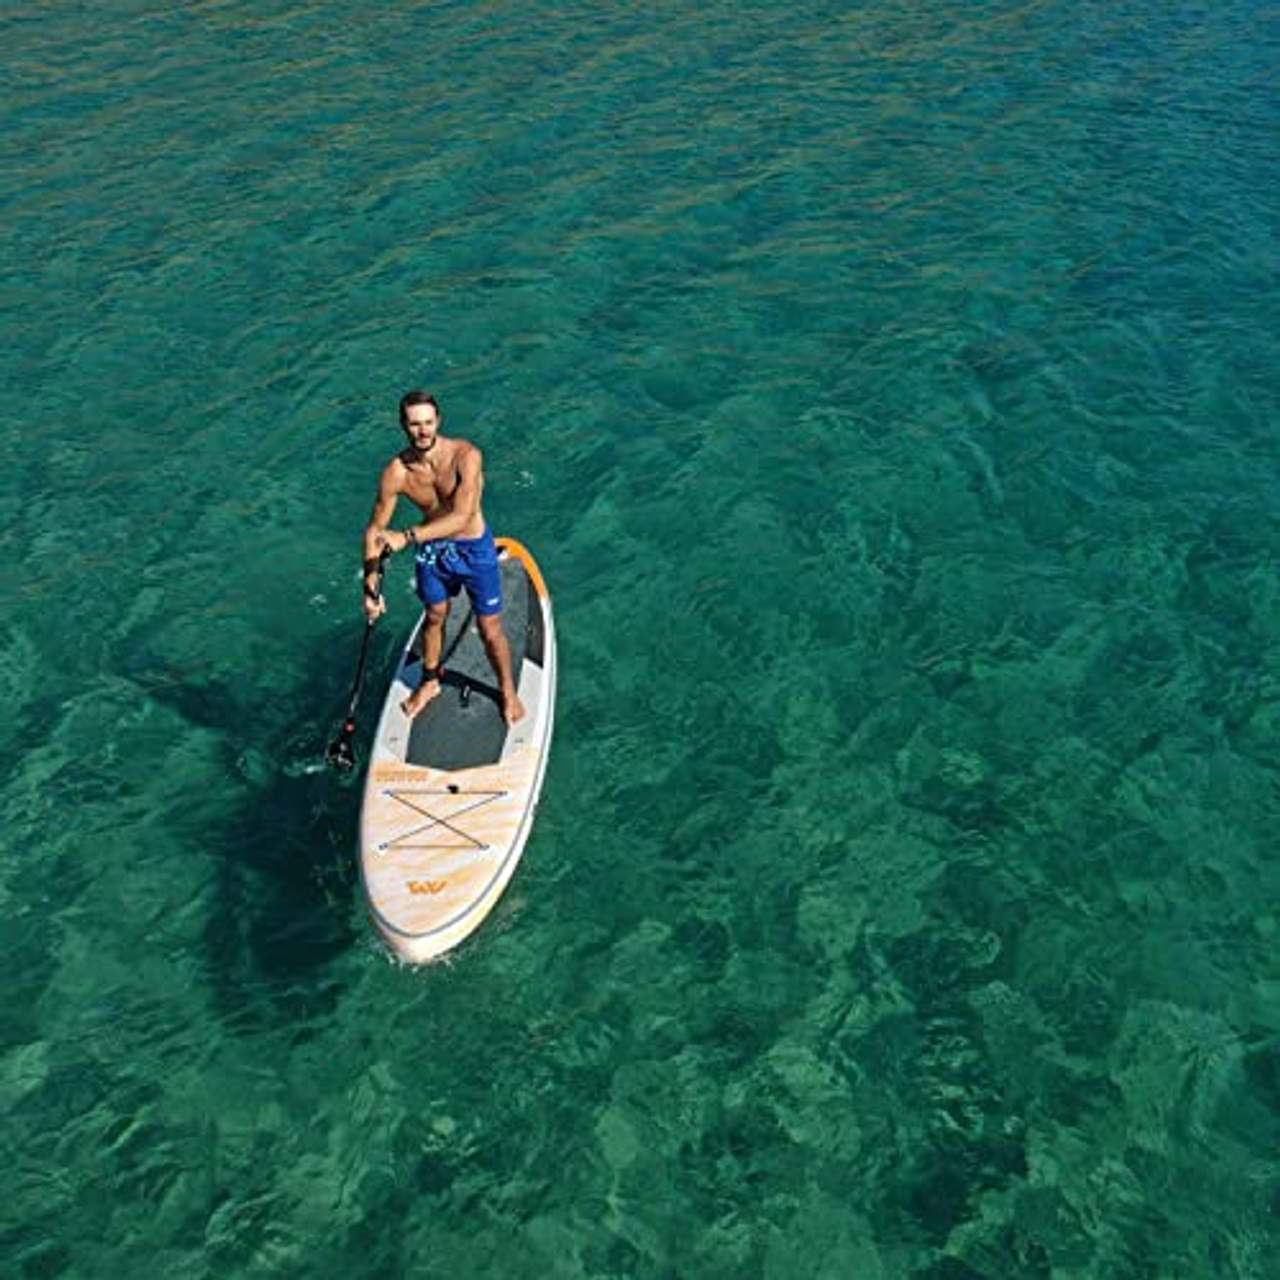 Aqua Marina Magma 2019 SUP Board Inflatable Stand Up Paddle  